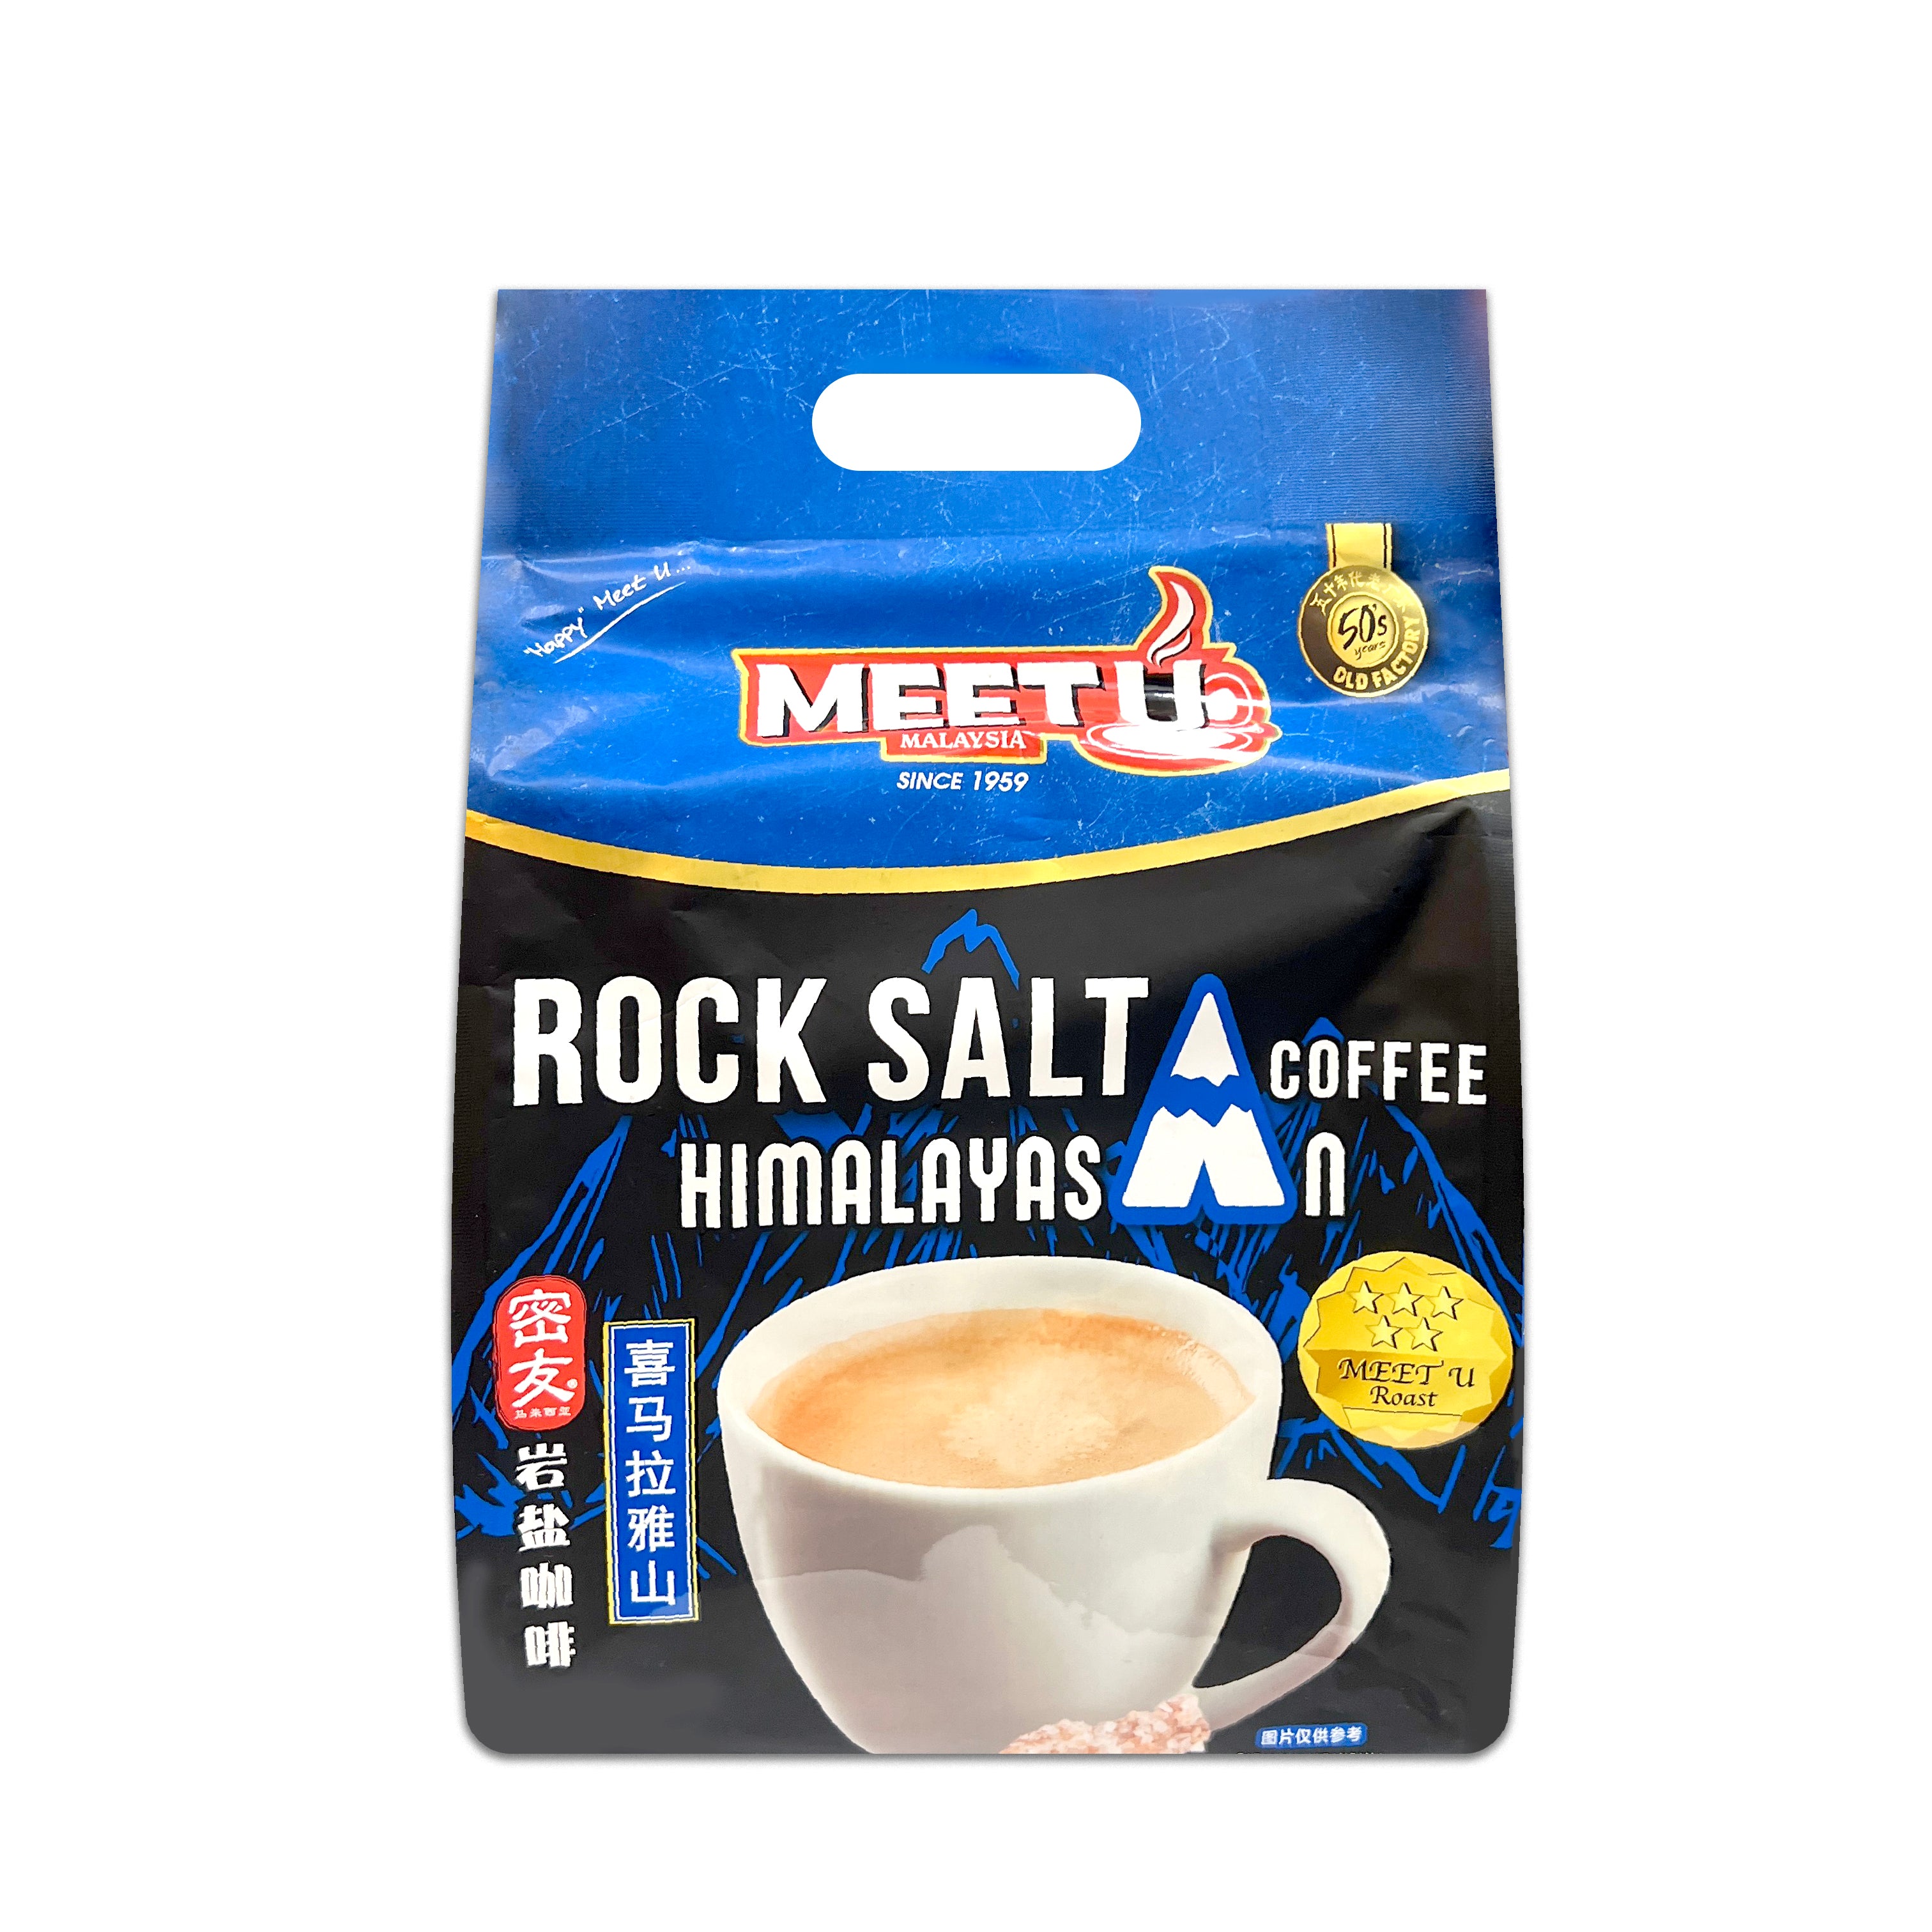 MEET U Rock Salt Himalayasan Coffee 15.80oz (448g) | (28 Stick Packs x 16g)